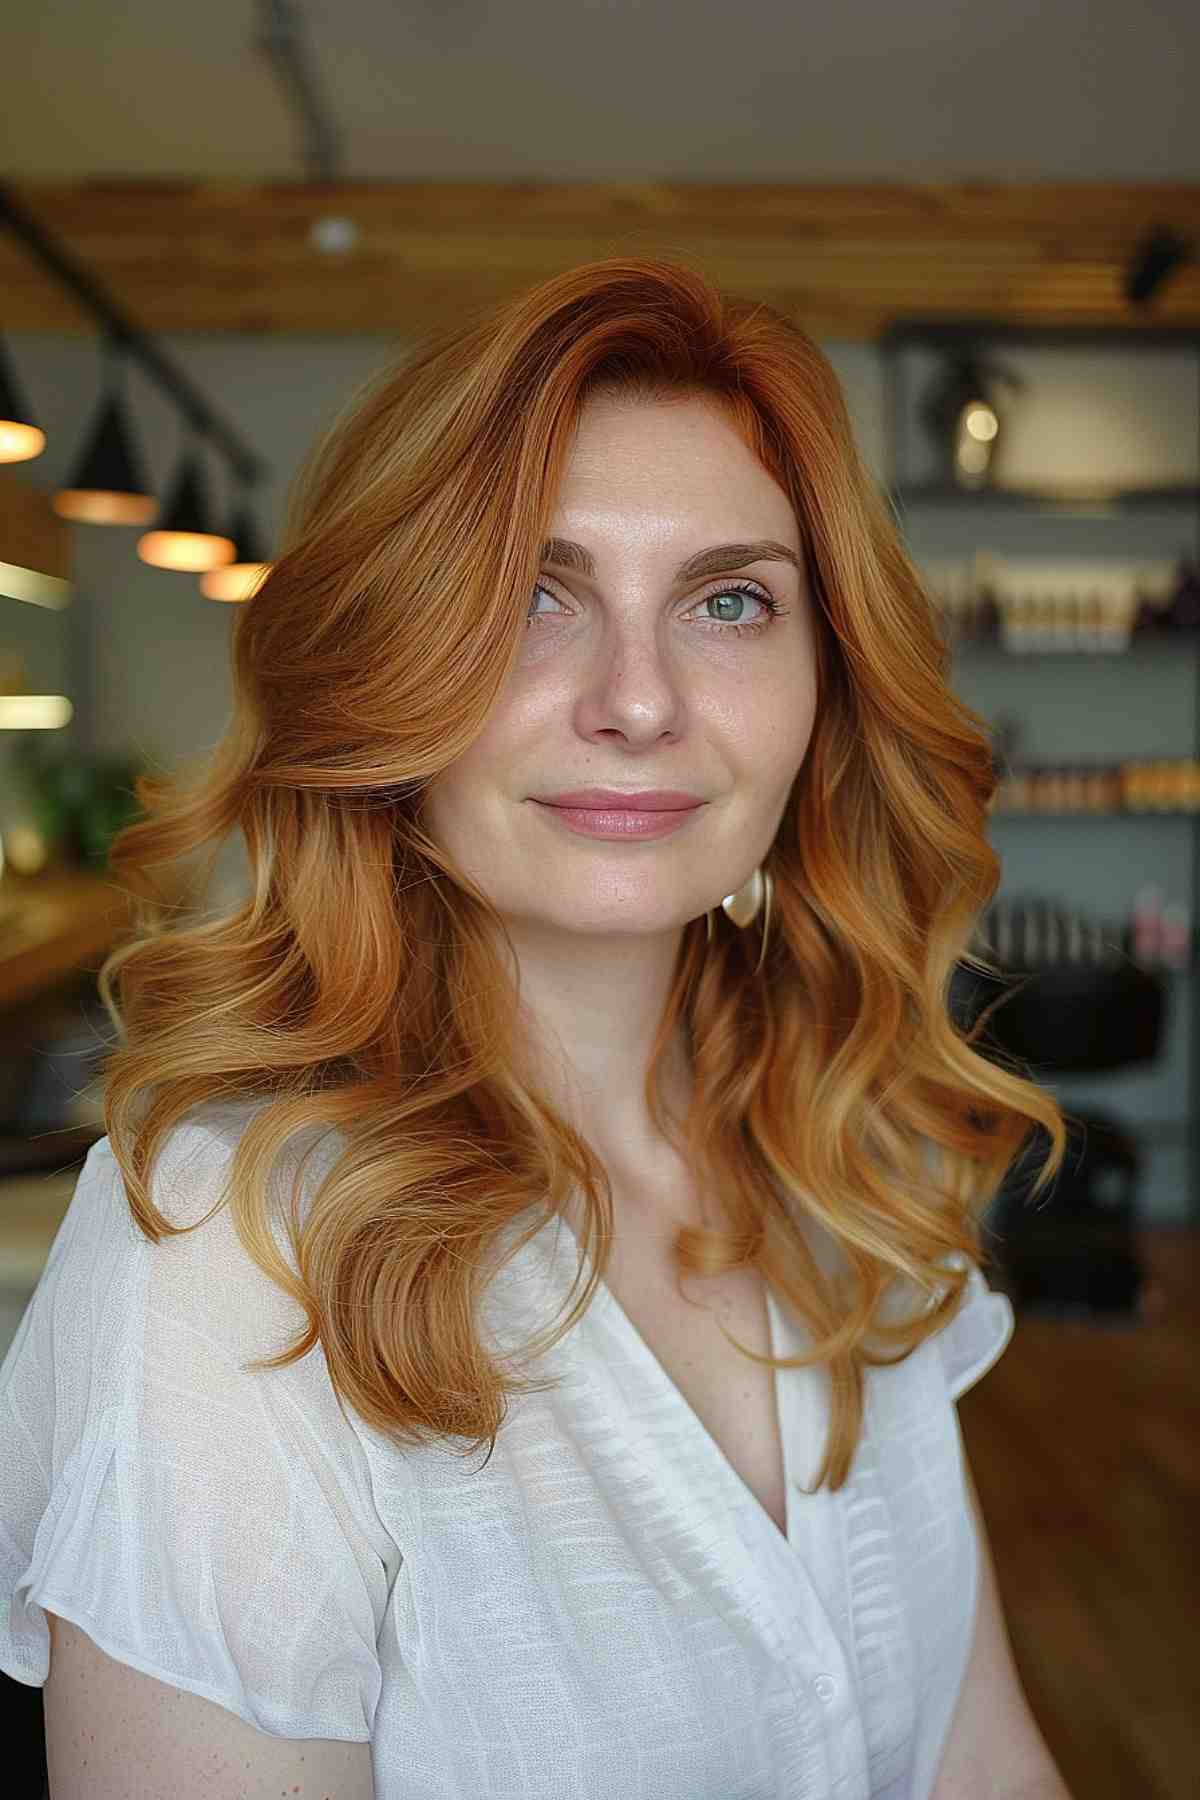 Medium-length strawberry blonde hair styled into soft waves